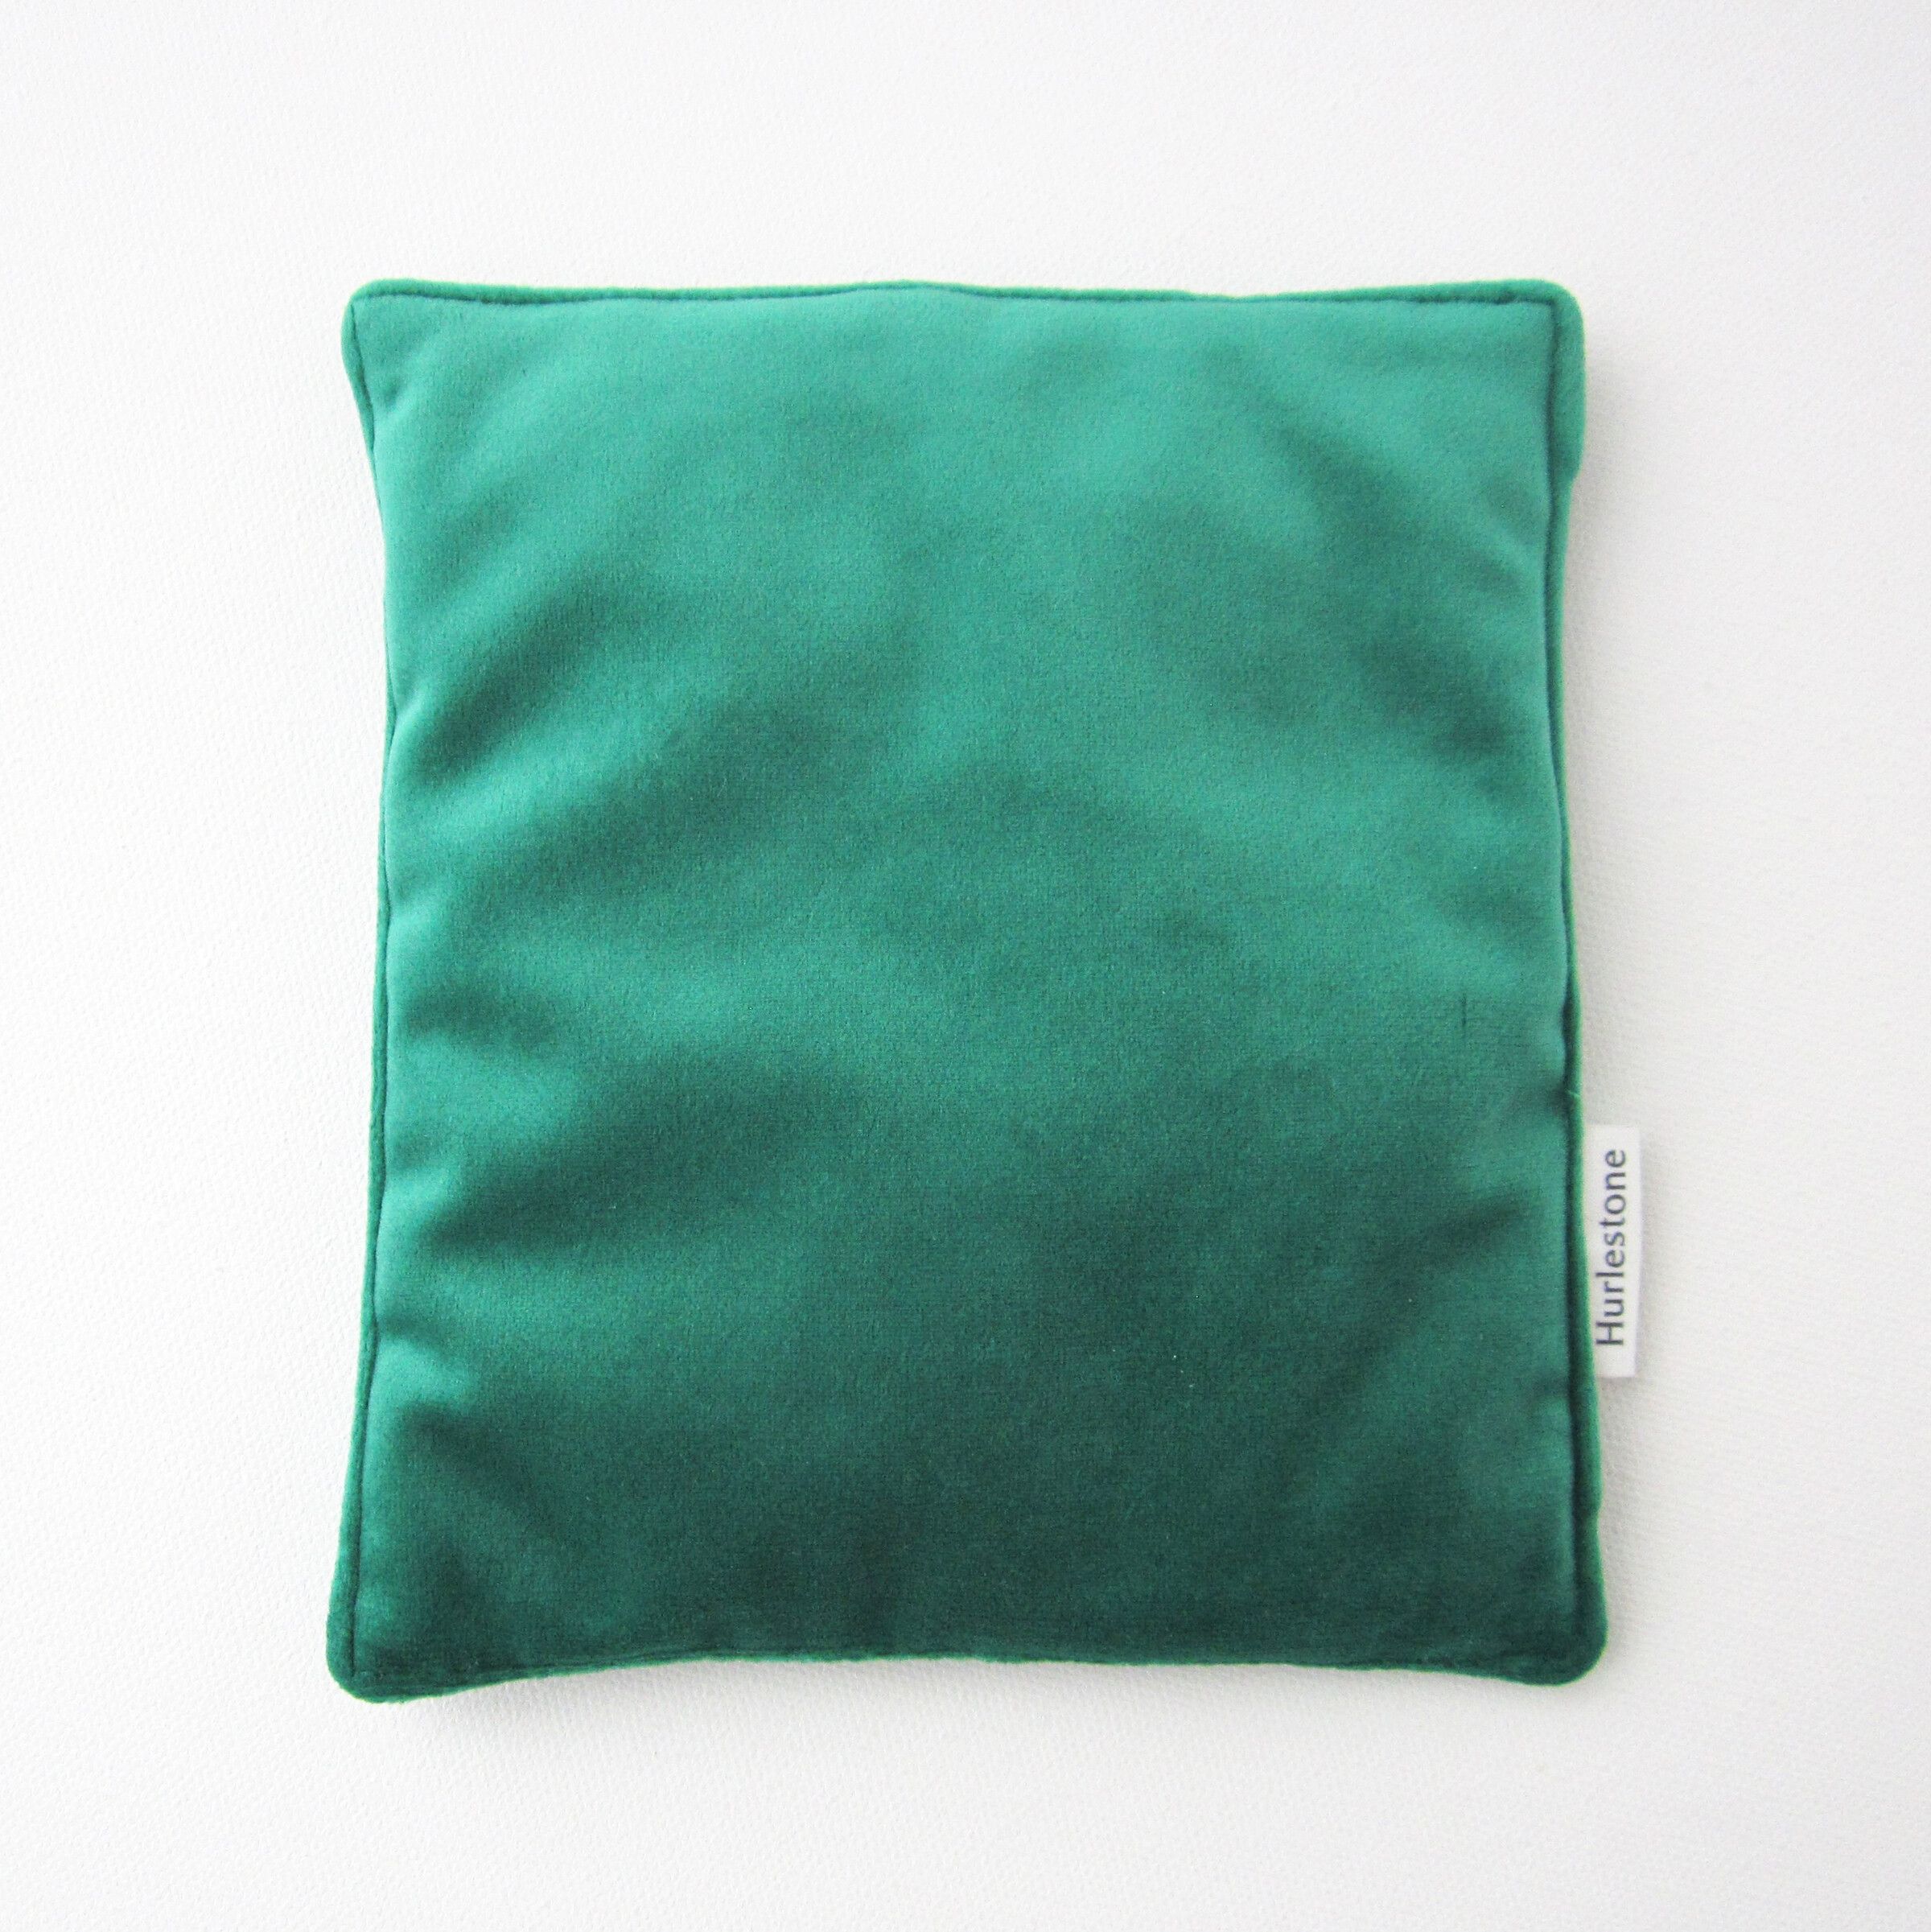 Emerald Pen Pillow - Large - ONE LEFT